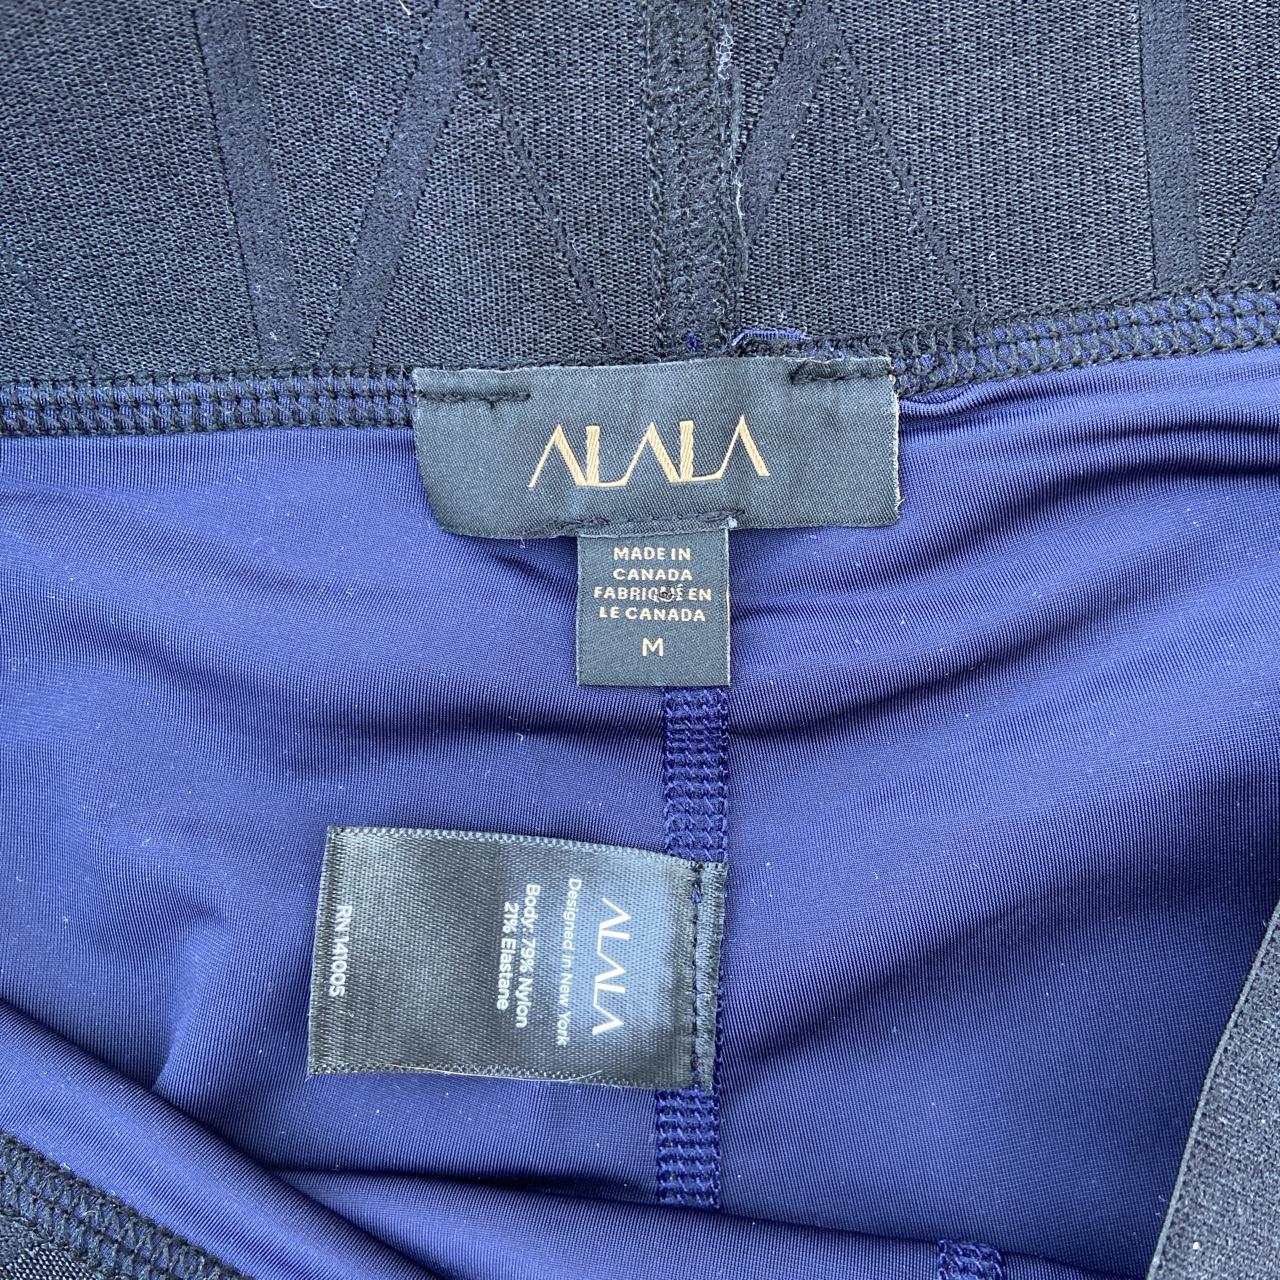 Product Image 4 - Alala leggings designed in New